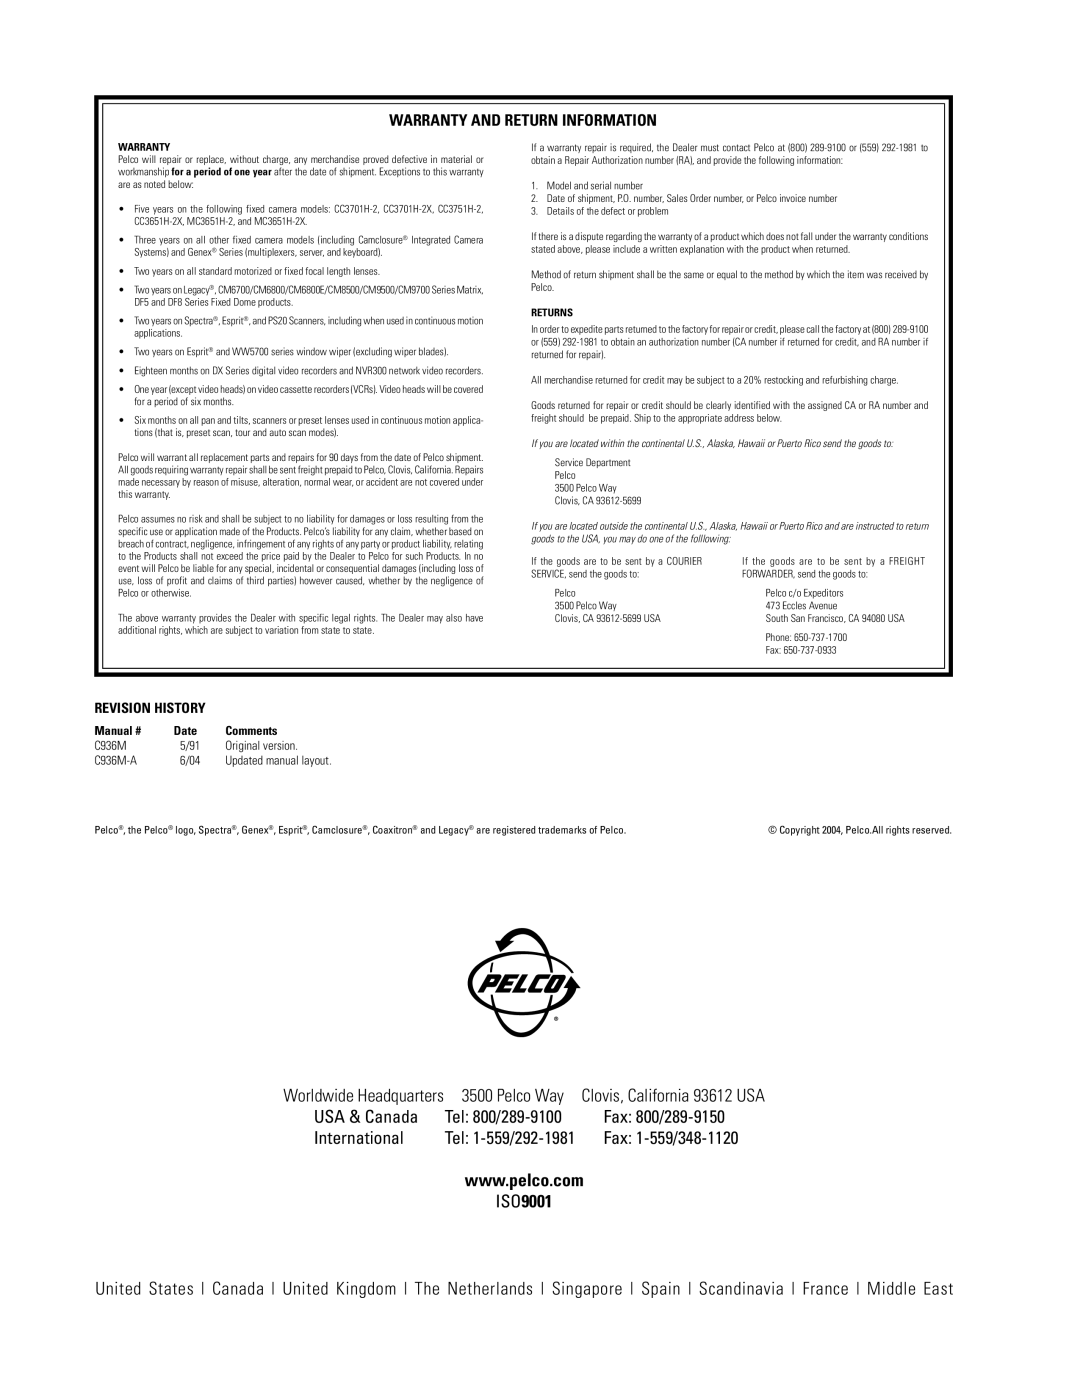 Pelco C6825 USA & Canada, Tel 800/289-9100, Fax 800/289-9150, International, Fax 1-559/348-1120, ISO9001, Revision History 